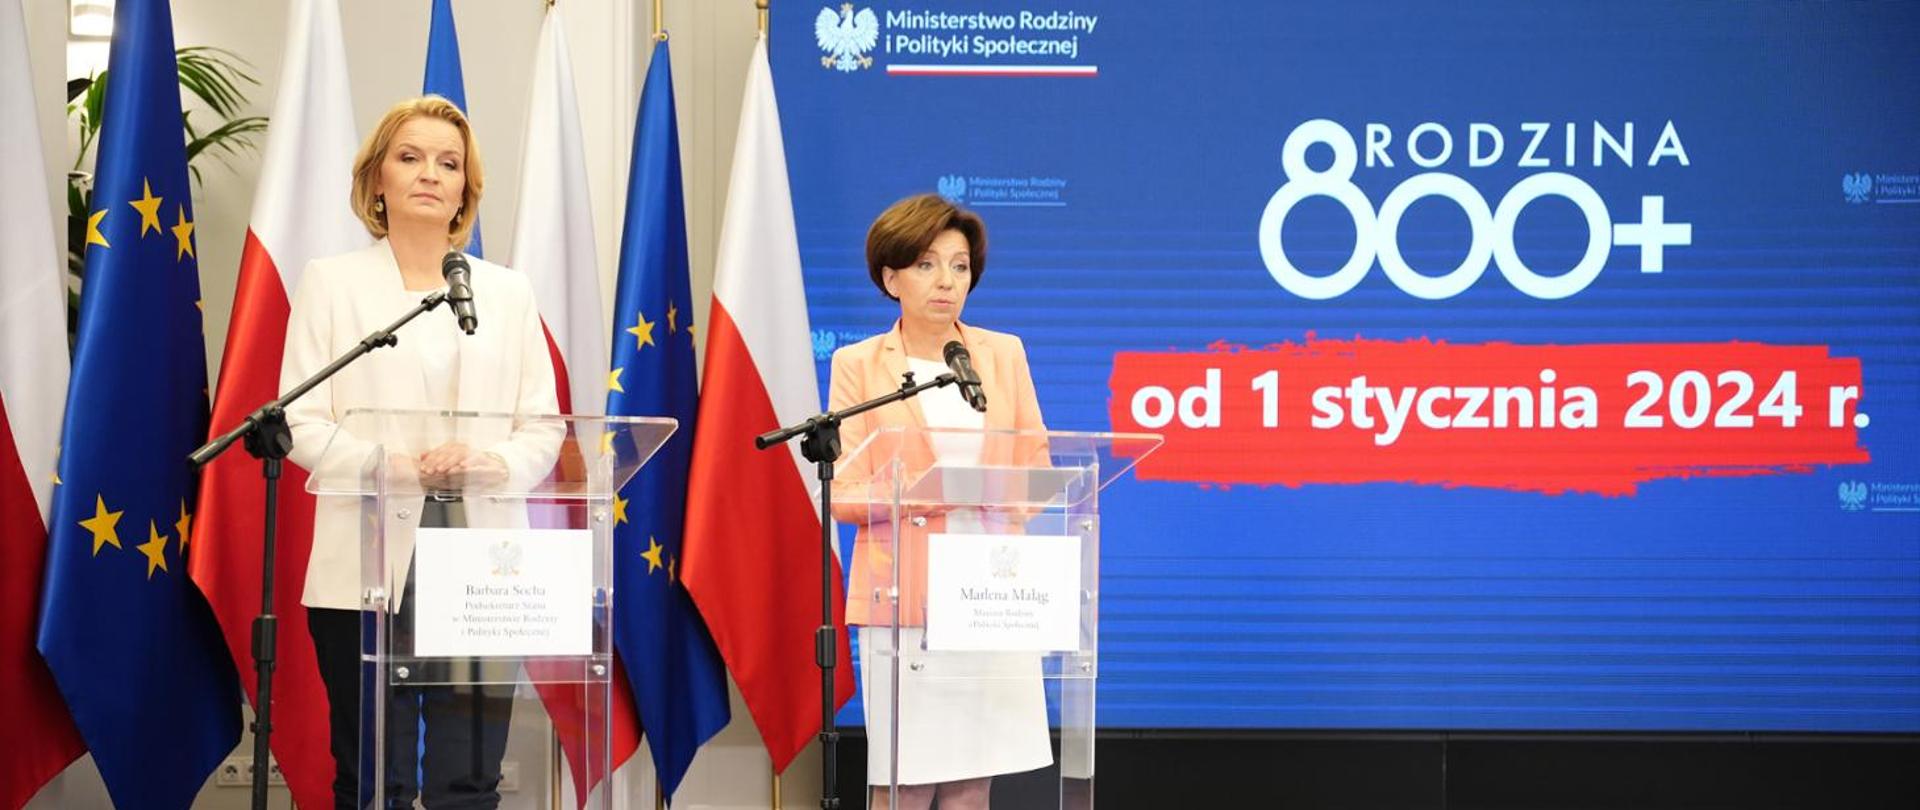 Minister Marlena Maląg and Barbara Socha on family programs